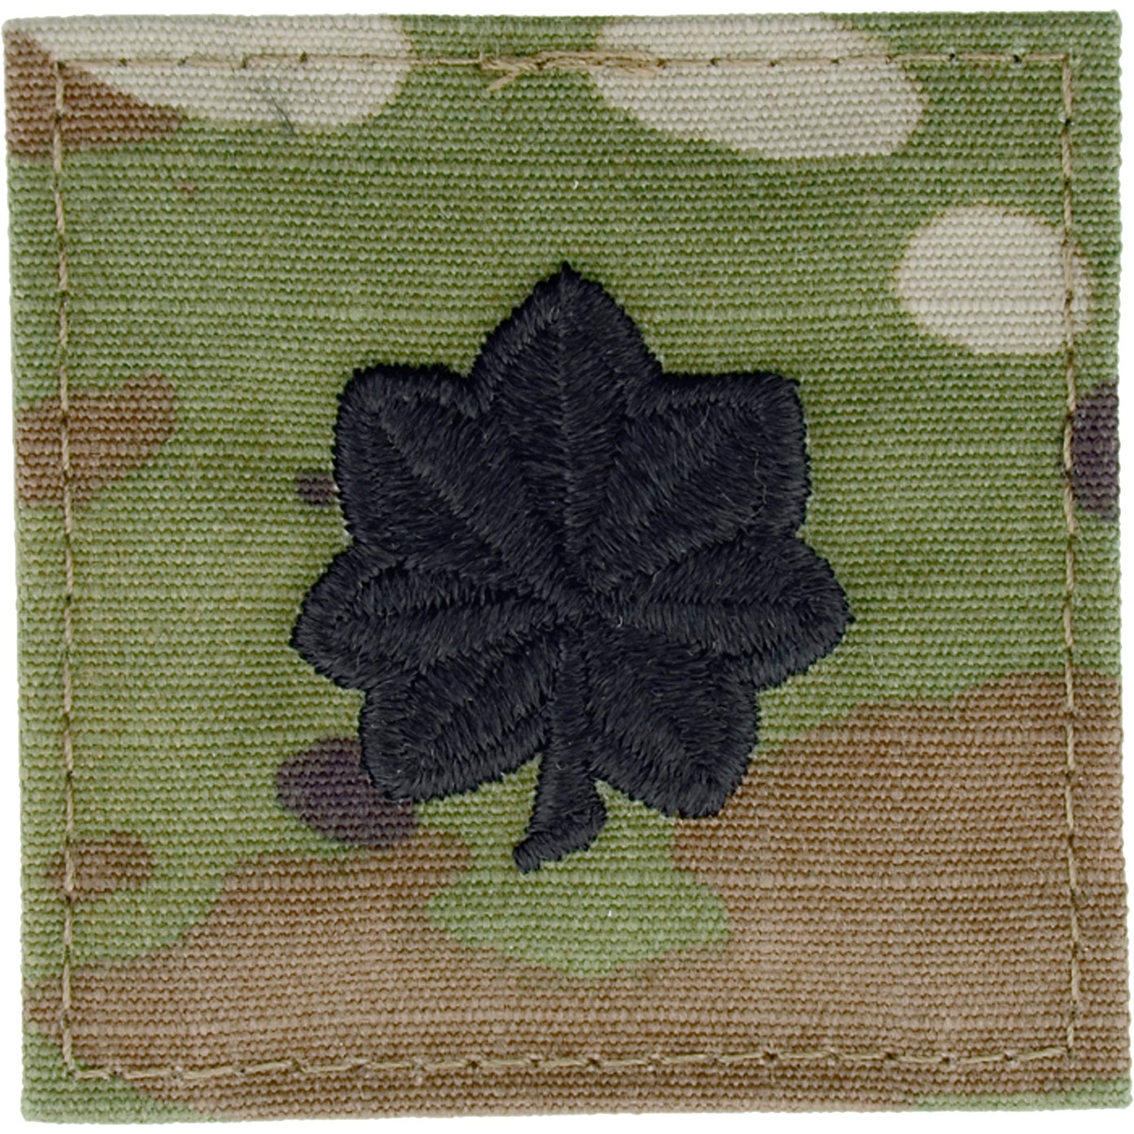 USA Lieutenant Colonel LTC 0-5 OD Green Desert Reversable slip on rank patch 